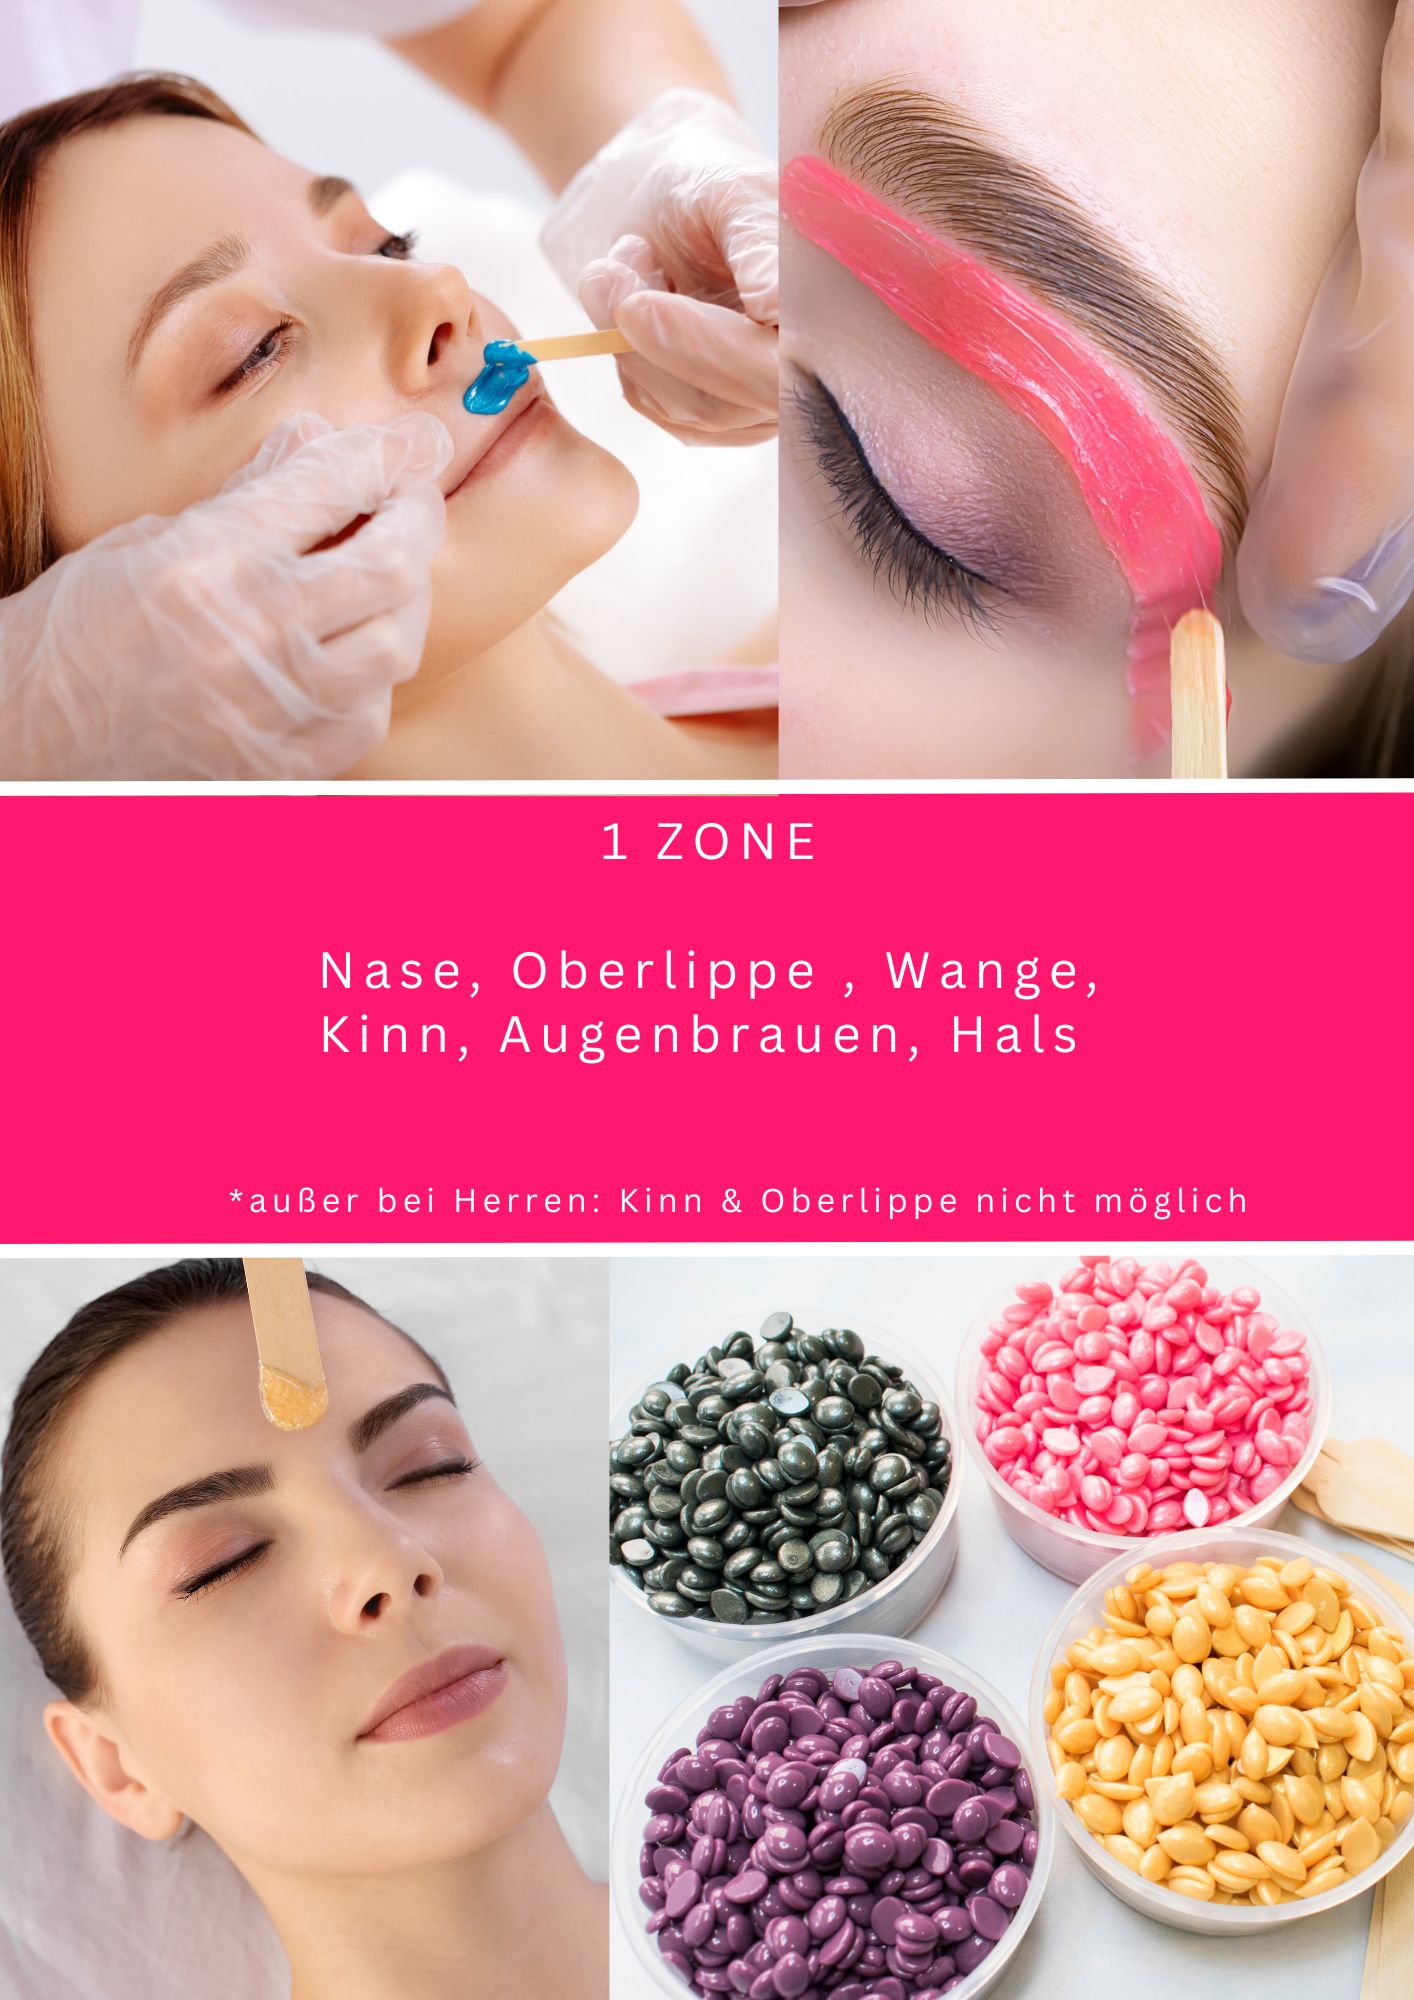 Premium Face Waxing (1 Zone)